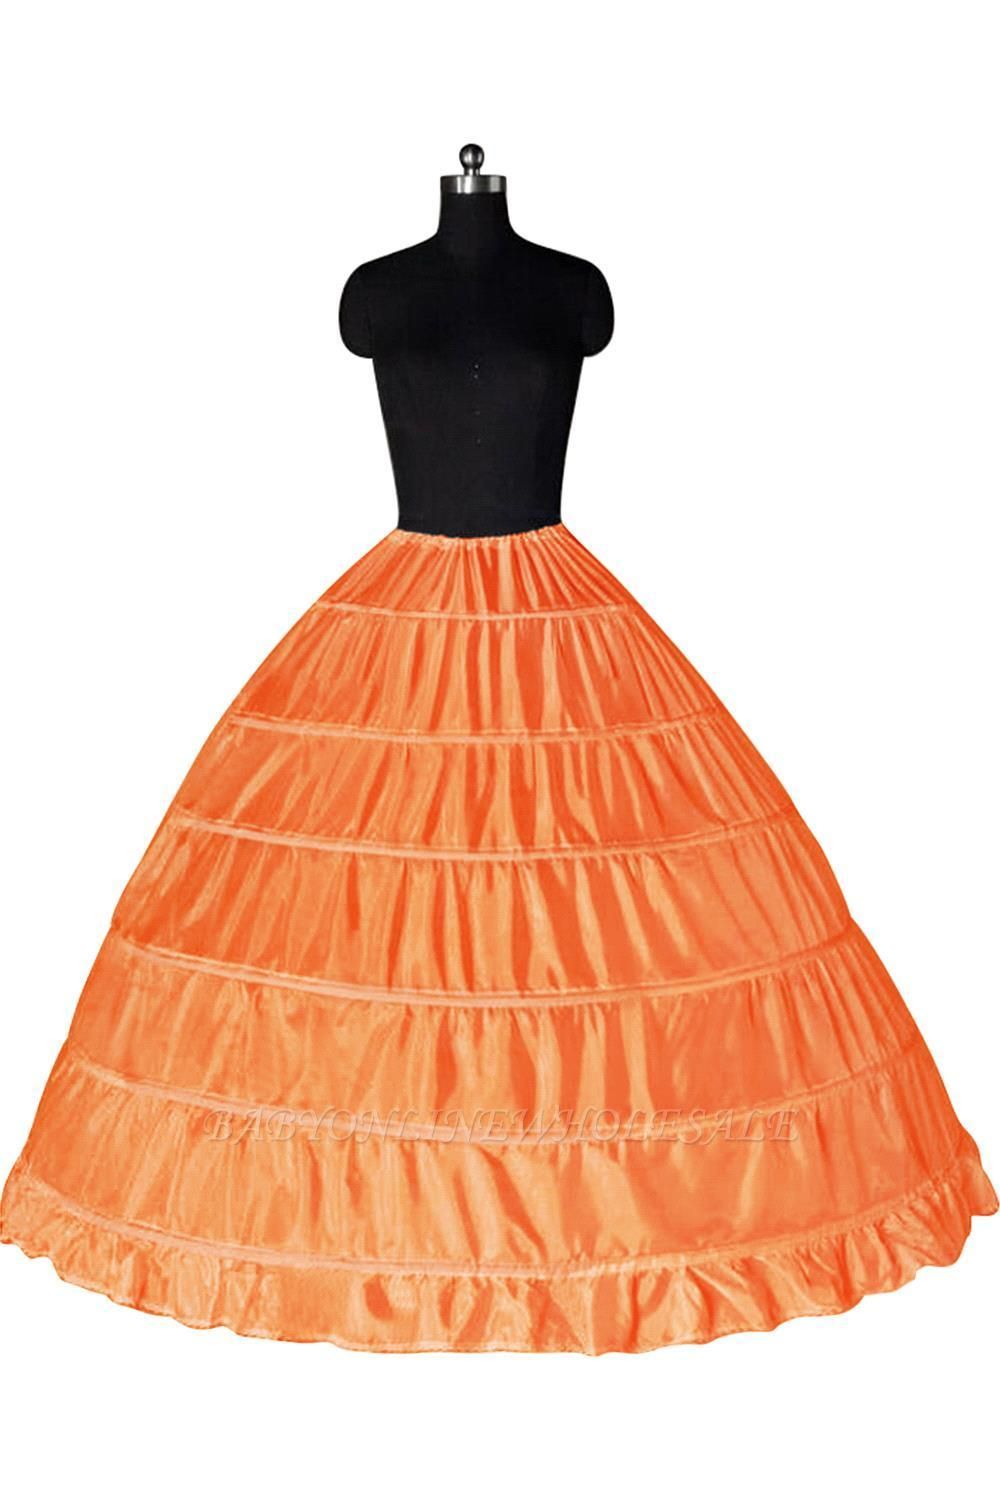 Colorful Taffeta Ball Gown Party Petticoats